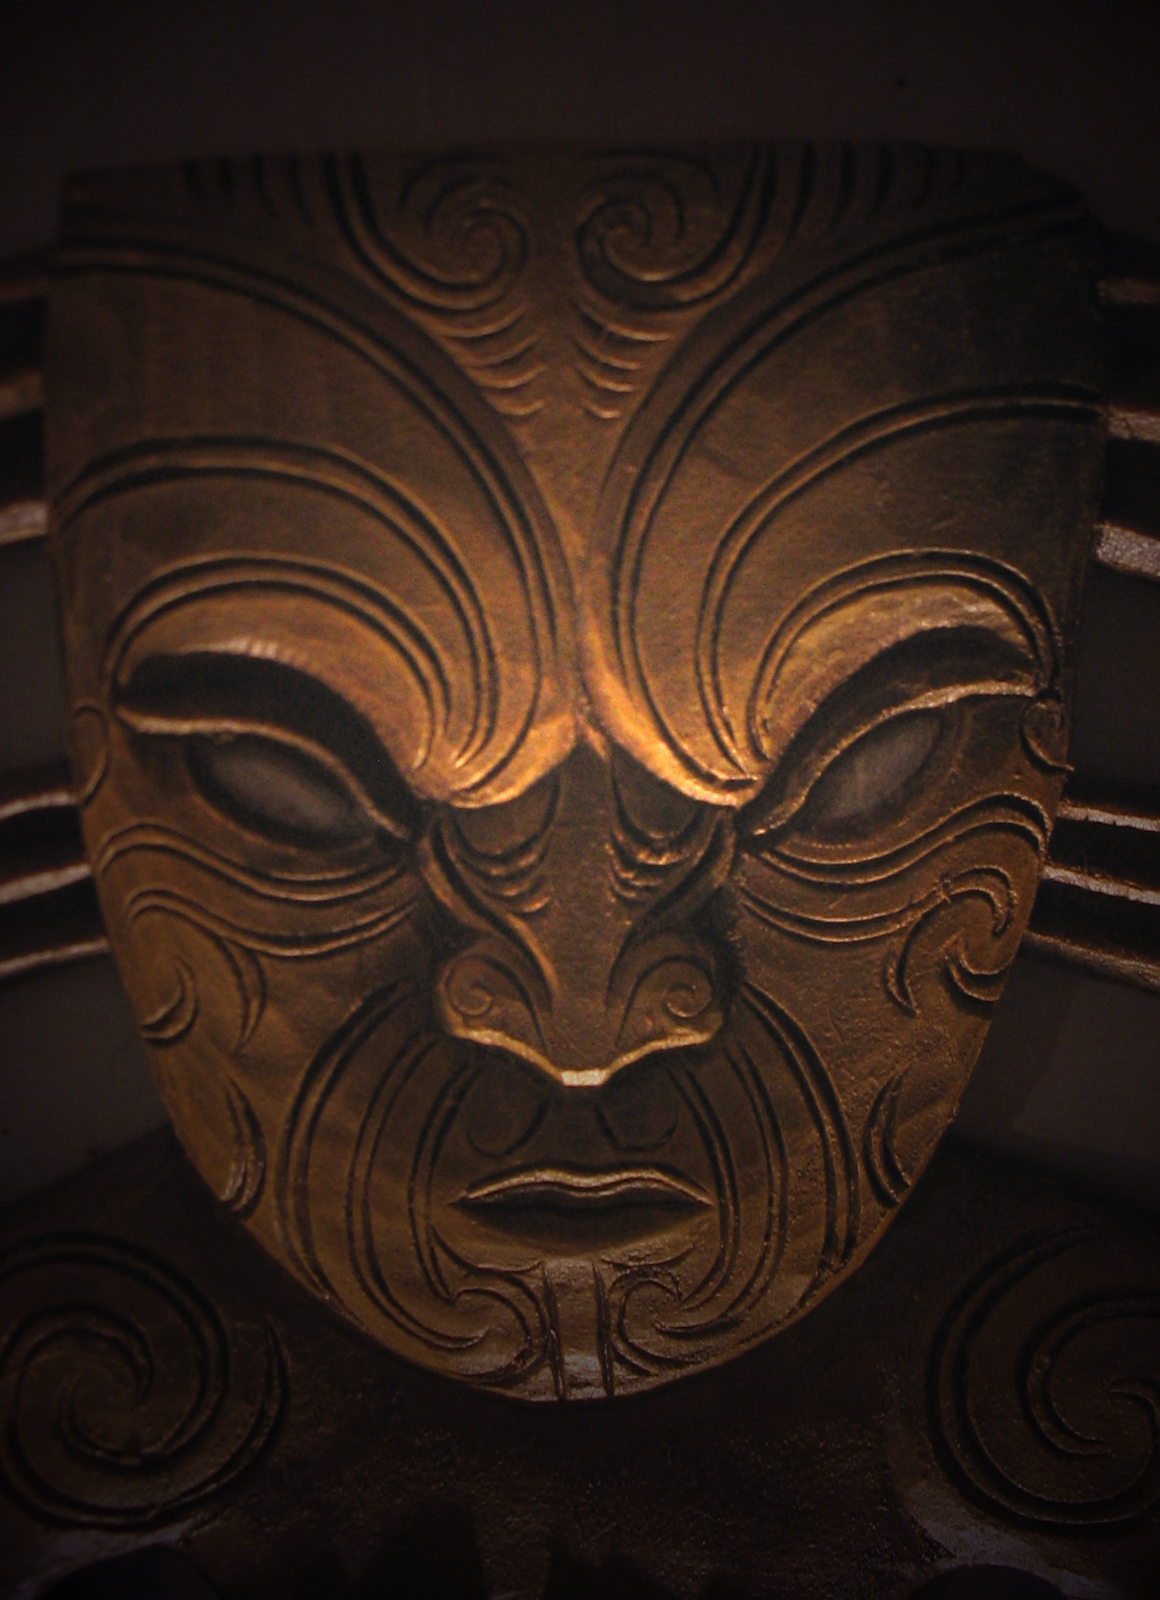 About the artist | Daniel Ormsby Maori Art
